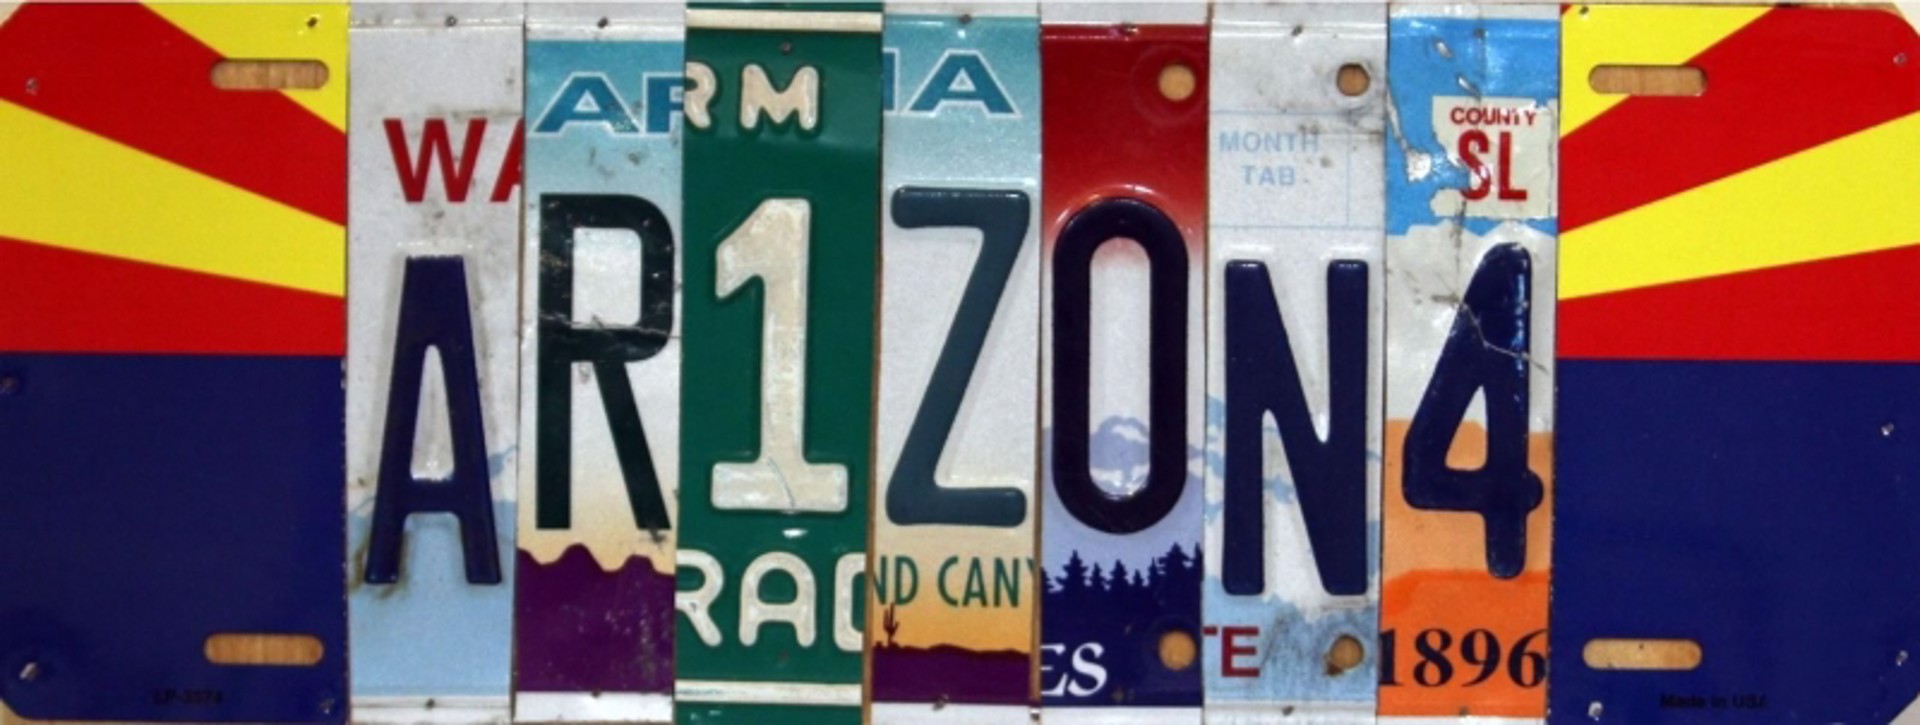 Lost License Plate - Arizona Specialty by Indigo Desert Ranch - Renewable Art